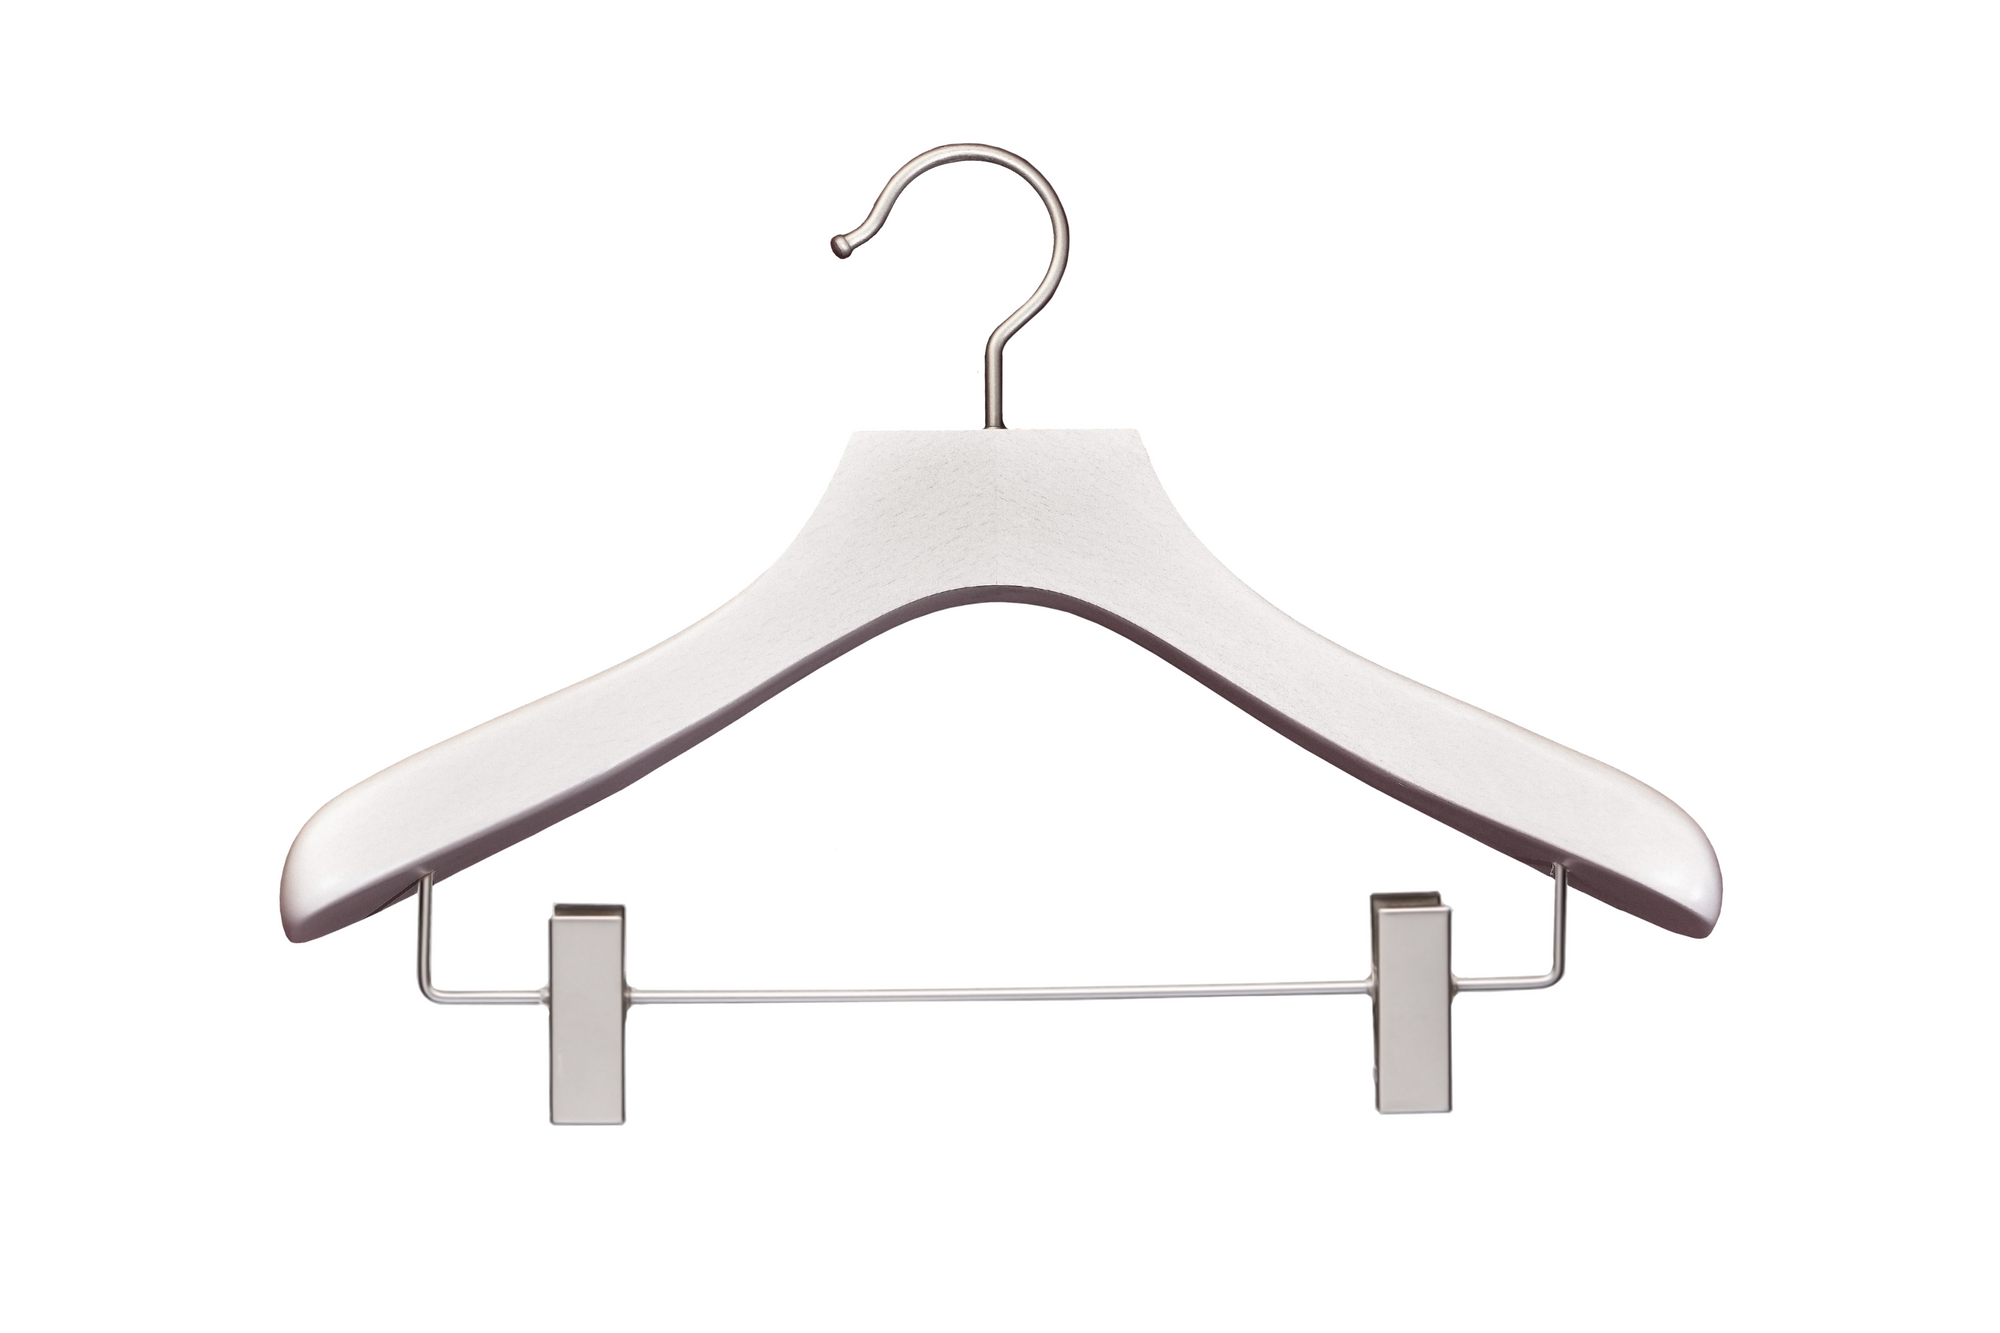 LUXURY Dress Shirt Wooden Hangers Customizable –